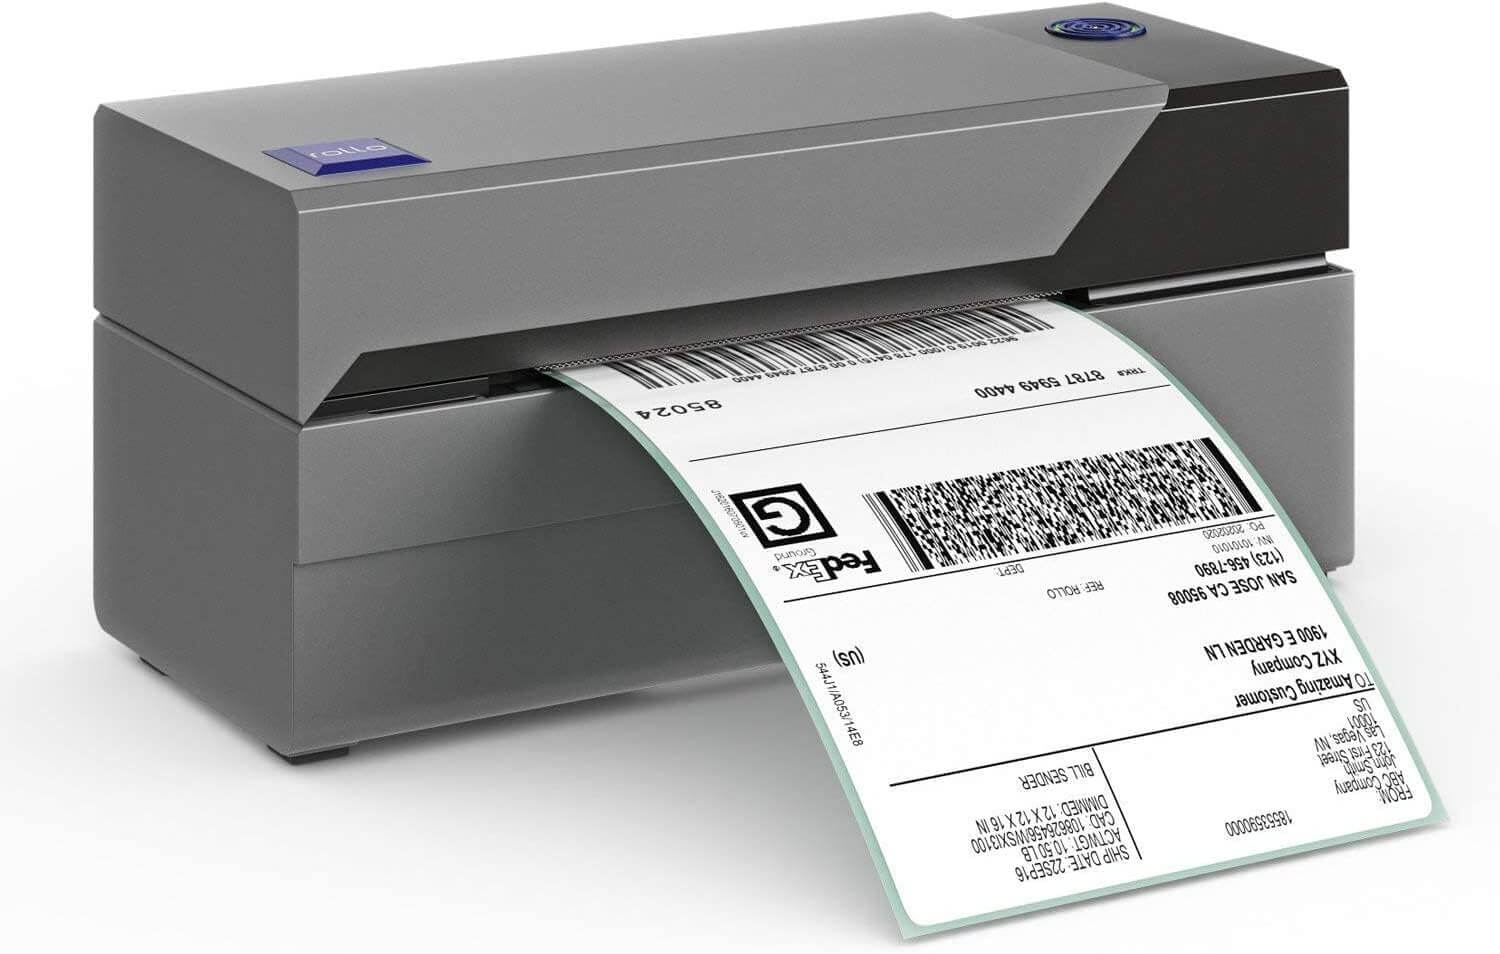 15. Rollo USB Shipping Label Printer - Commercial Grade Thermal Label Printer